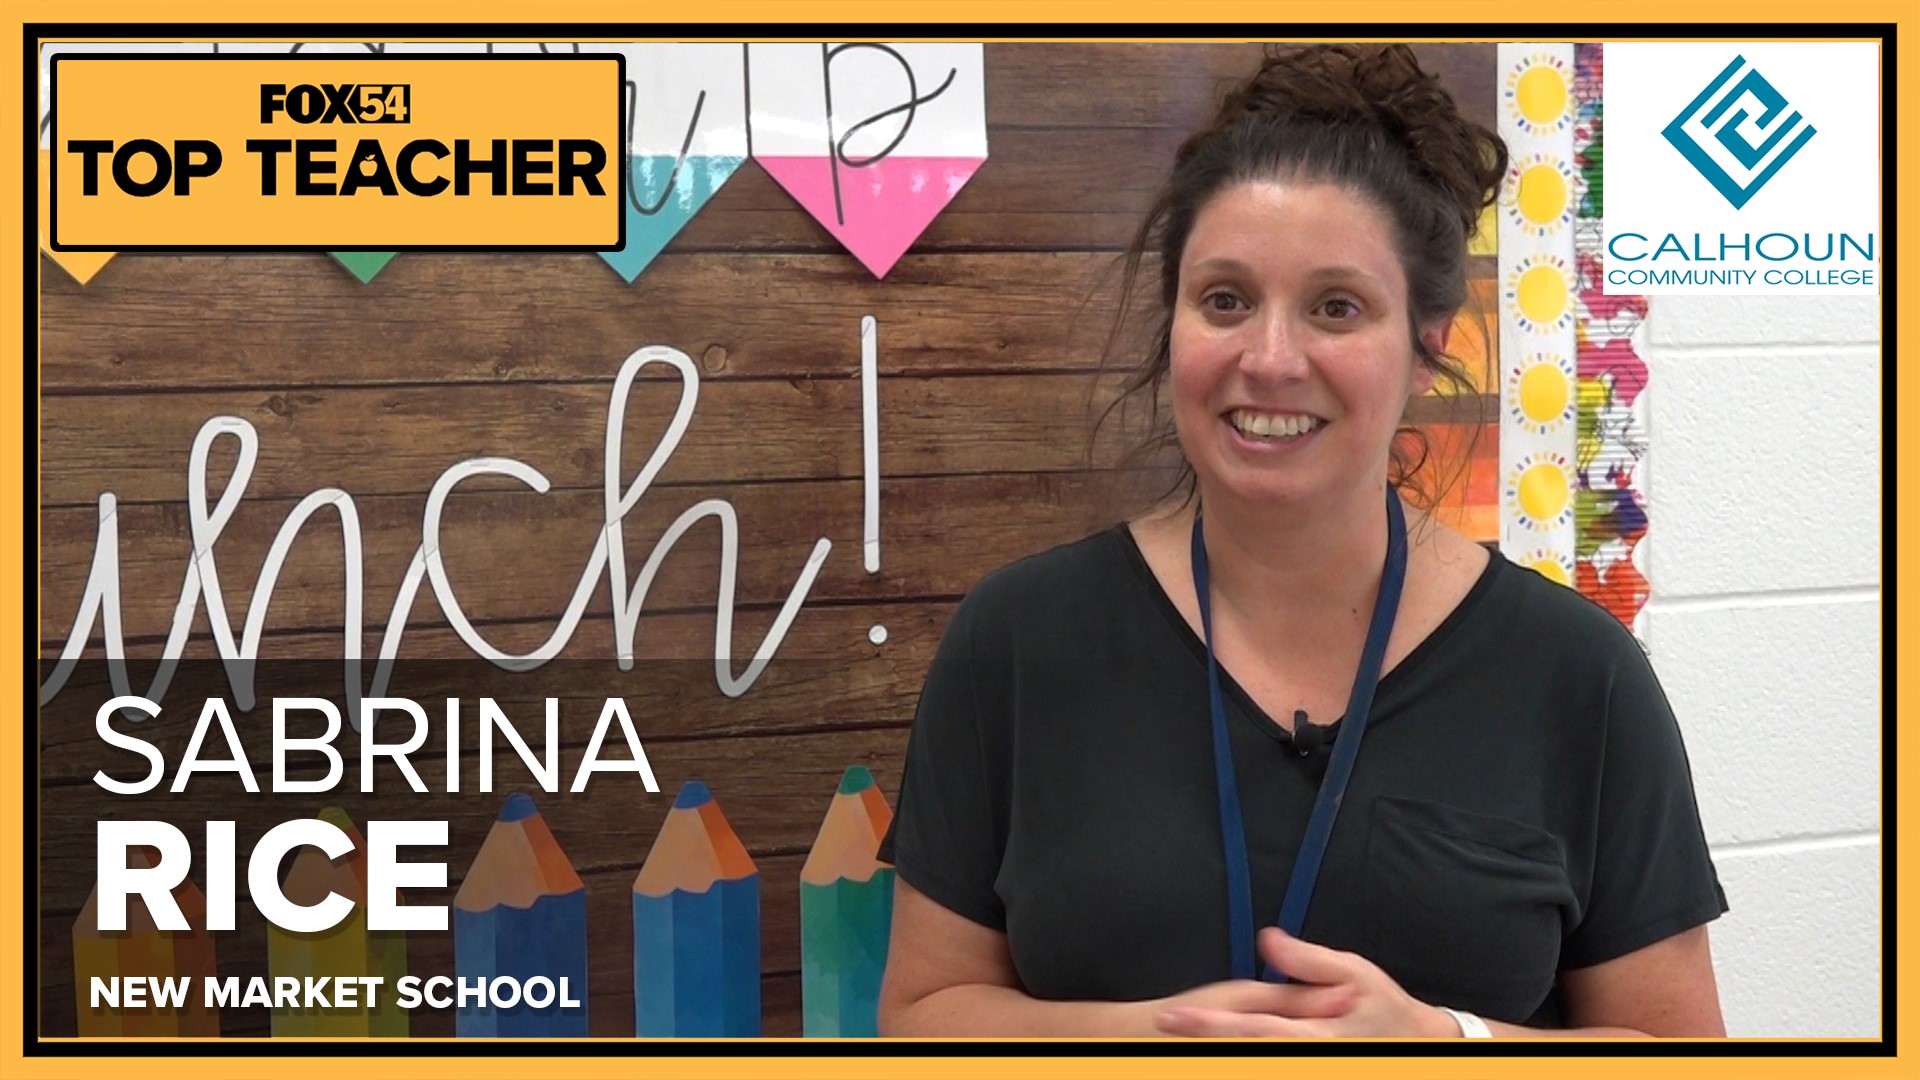 Sabrina Rice 20 years of teaching experience